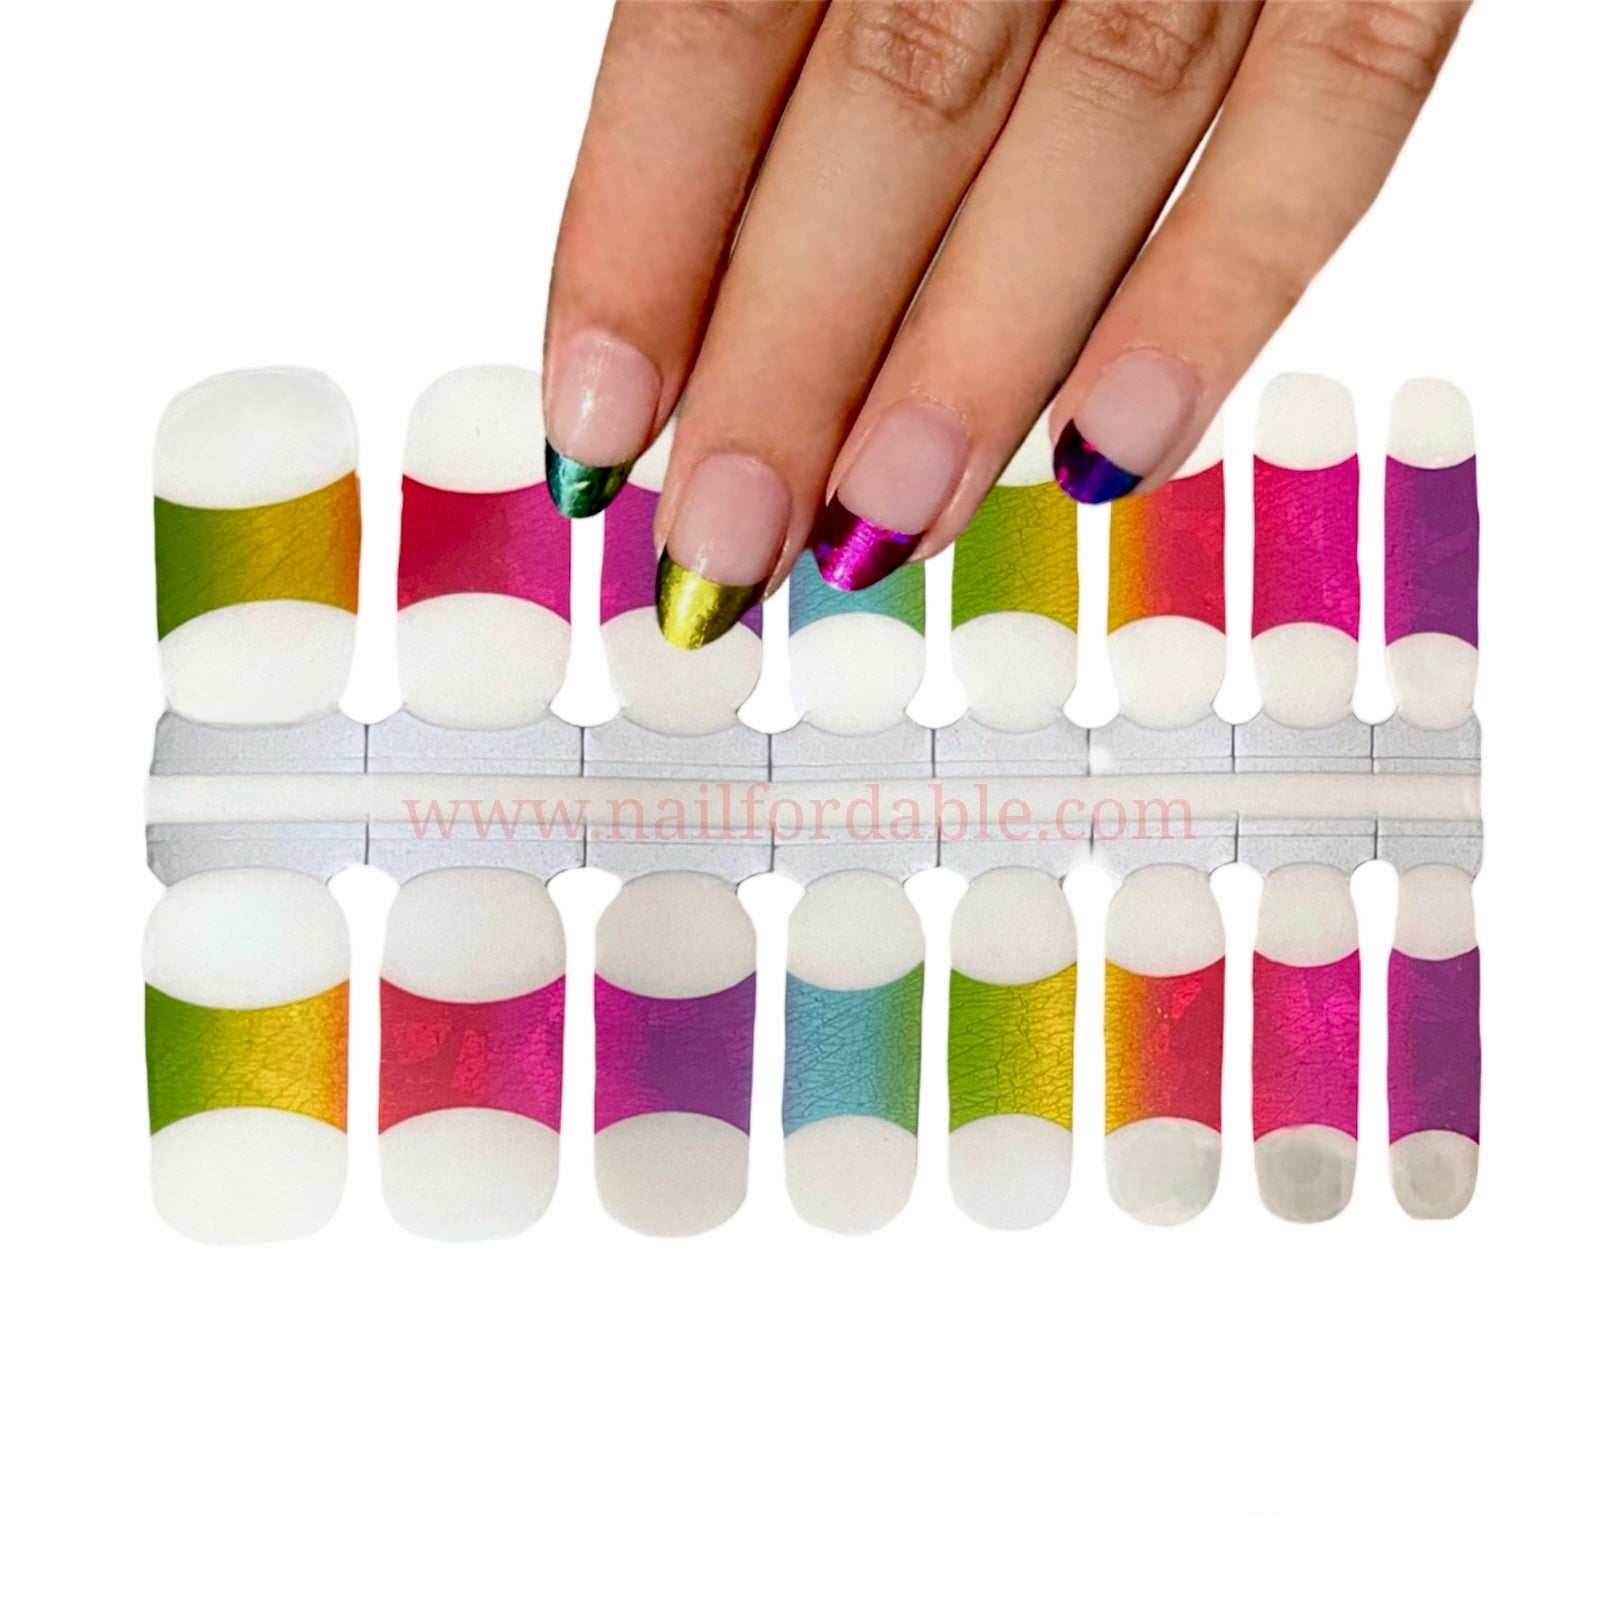 Chrome Rainbow -French tips | Nail Wraps | Nail Stickers | Nail Strips | Gel Nails | Nail Polish Wraps - Nailfordable